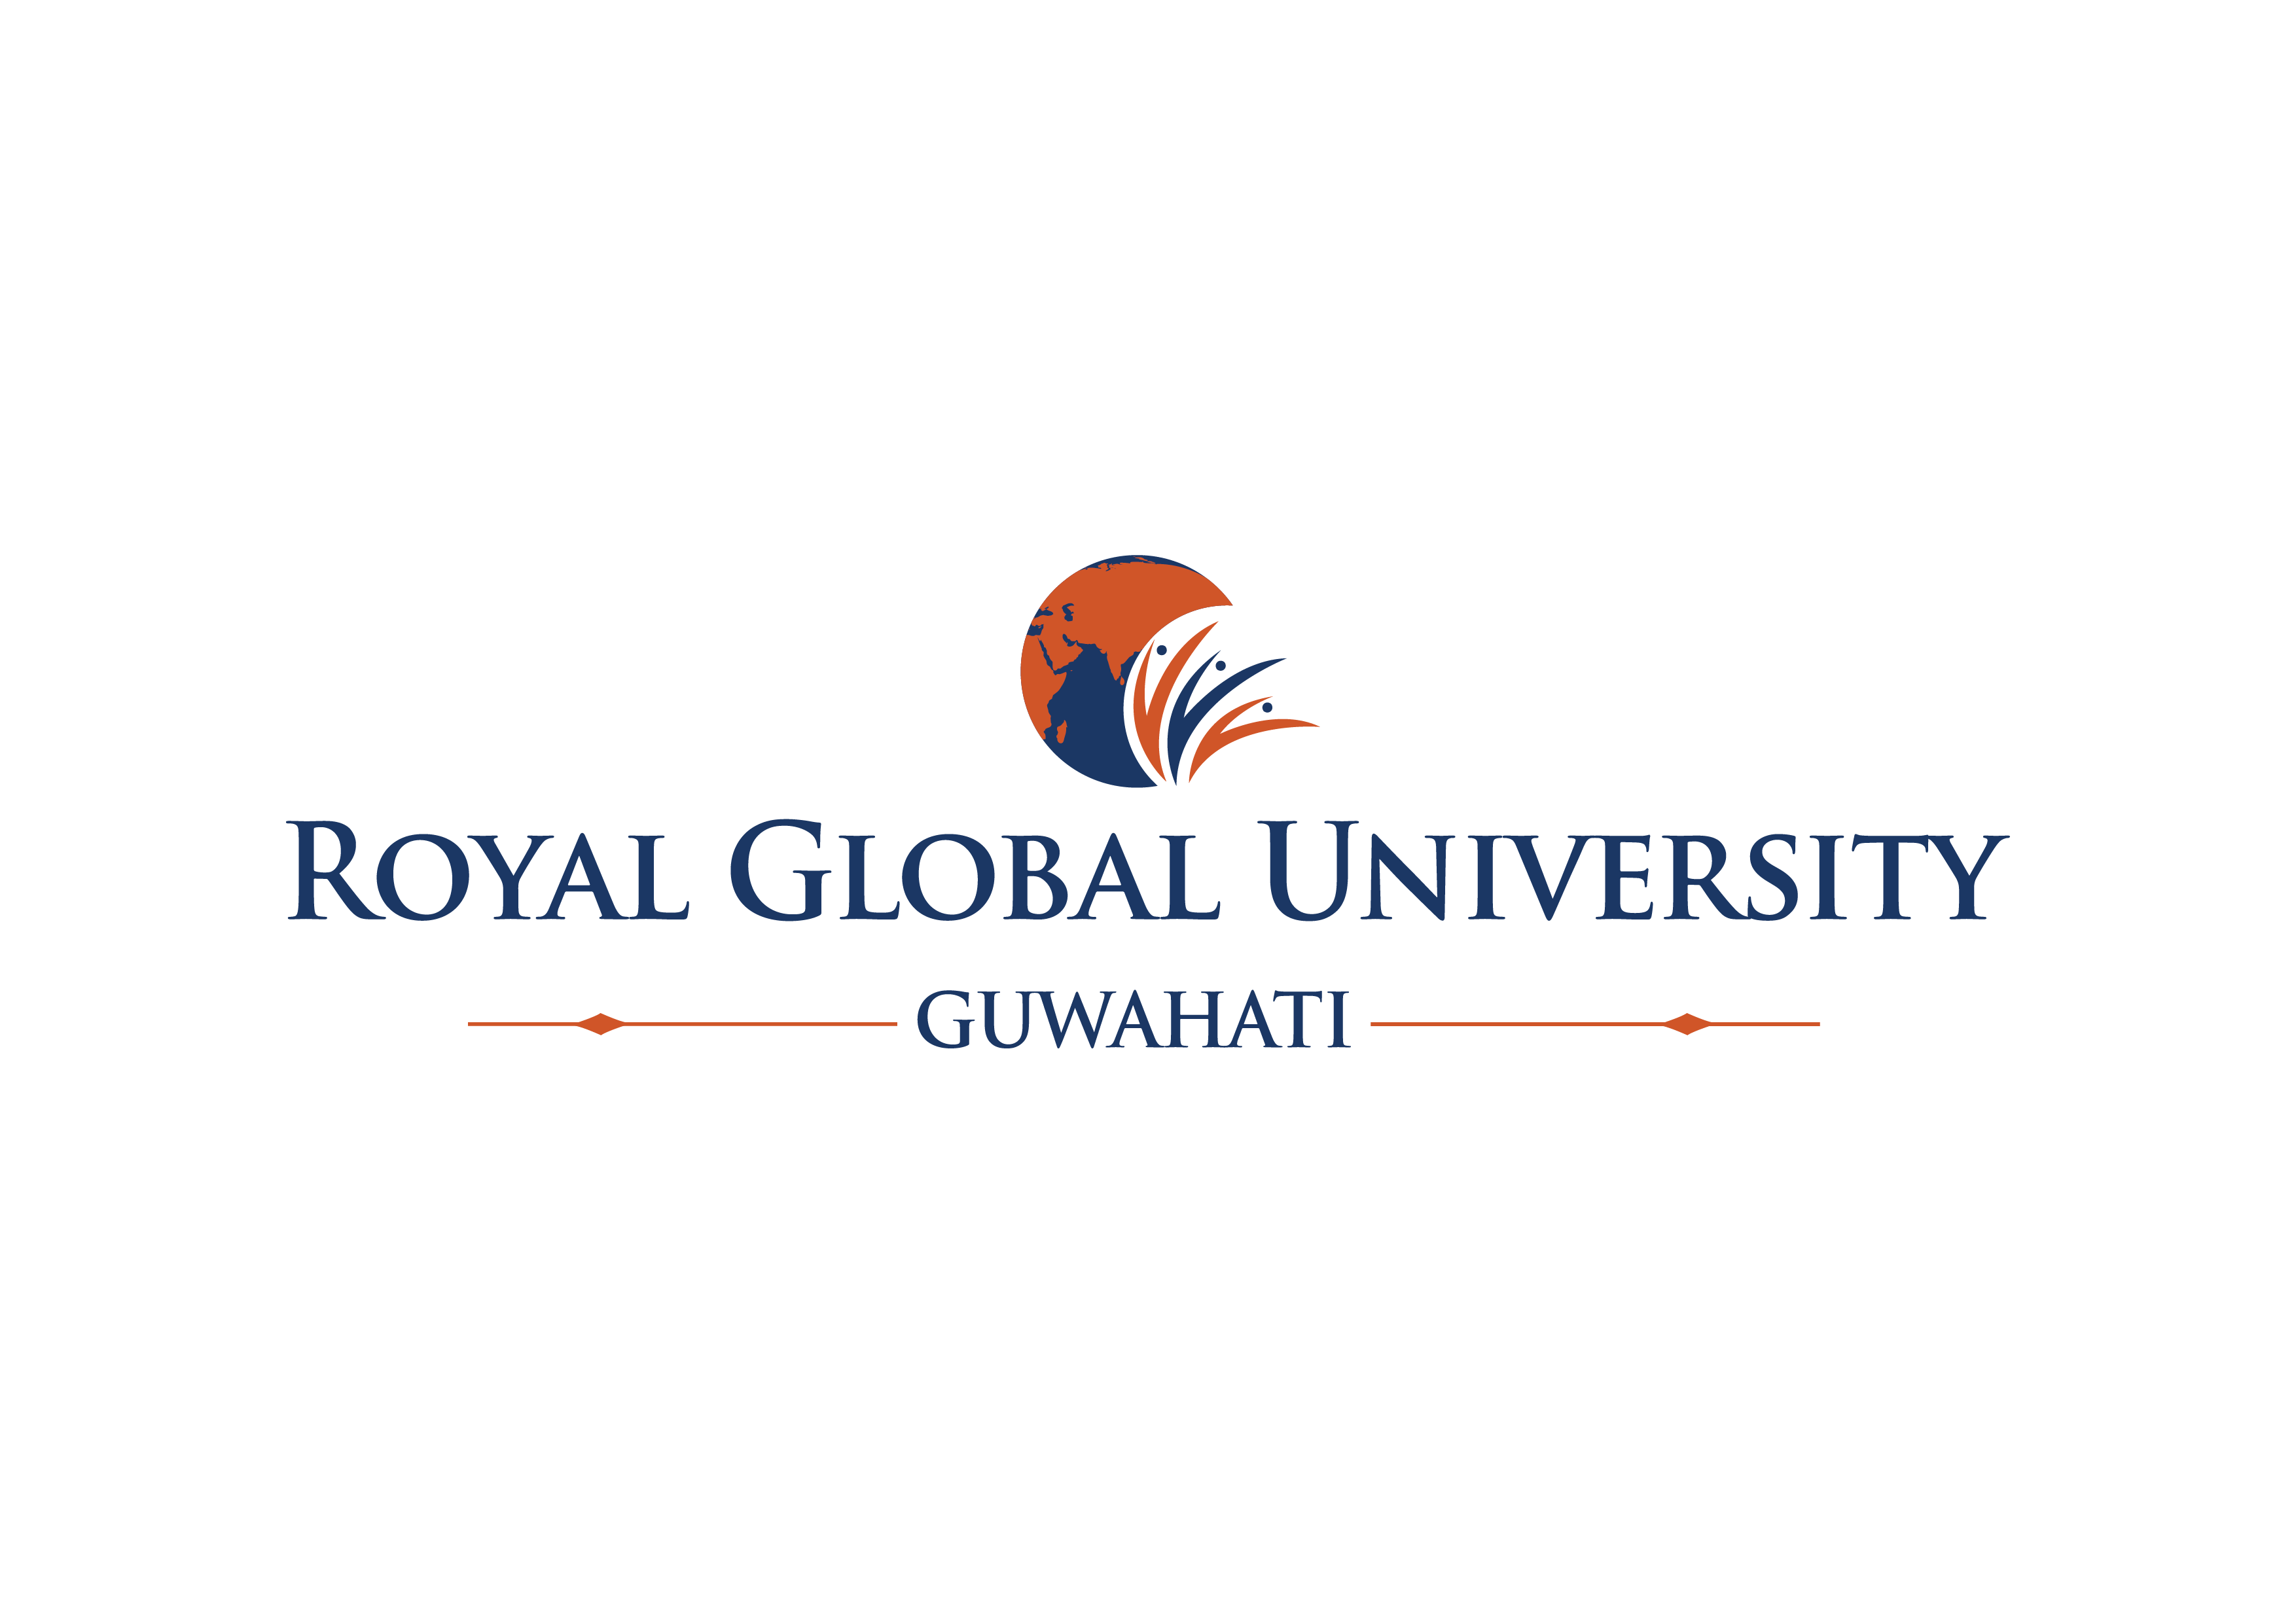 Royal Global University, Ranked #1 in Assam, India